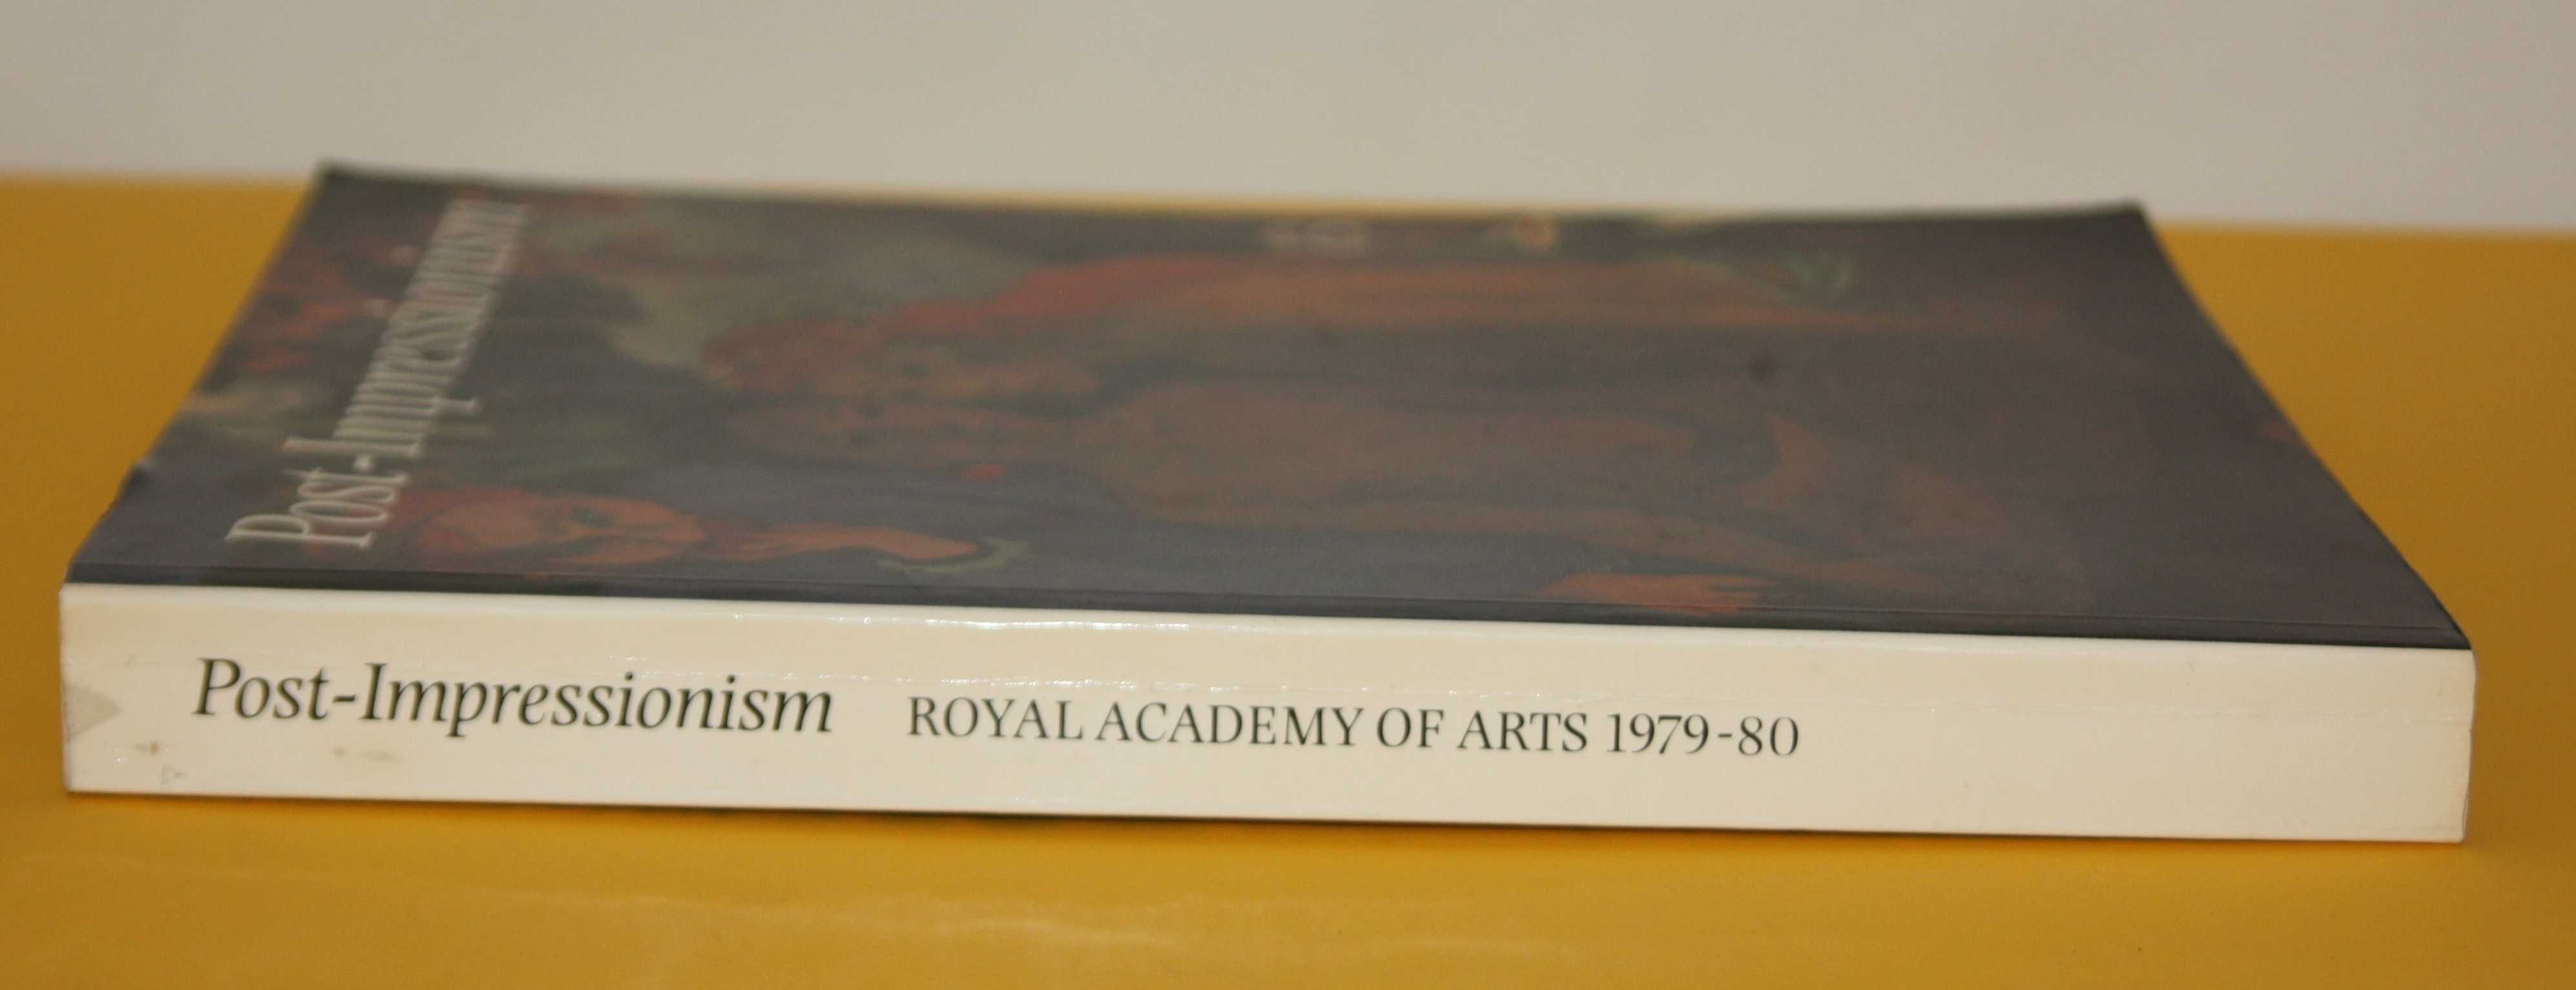 POST-IMPRESSIONISM Royal Academy of Arts 1979-80 katalog